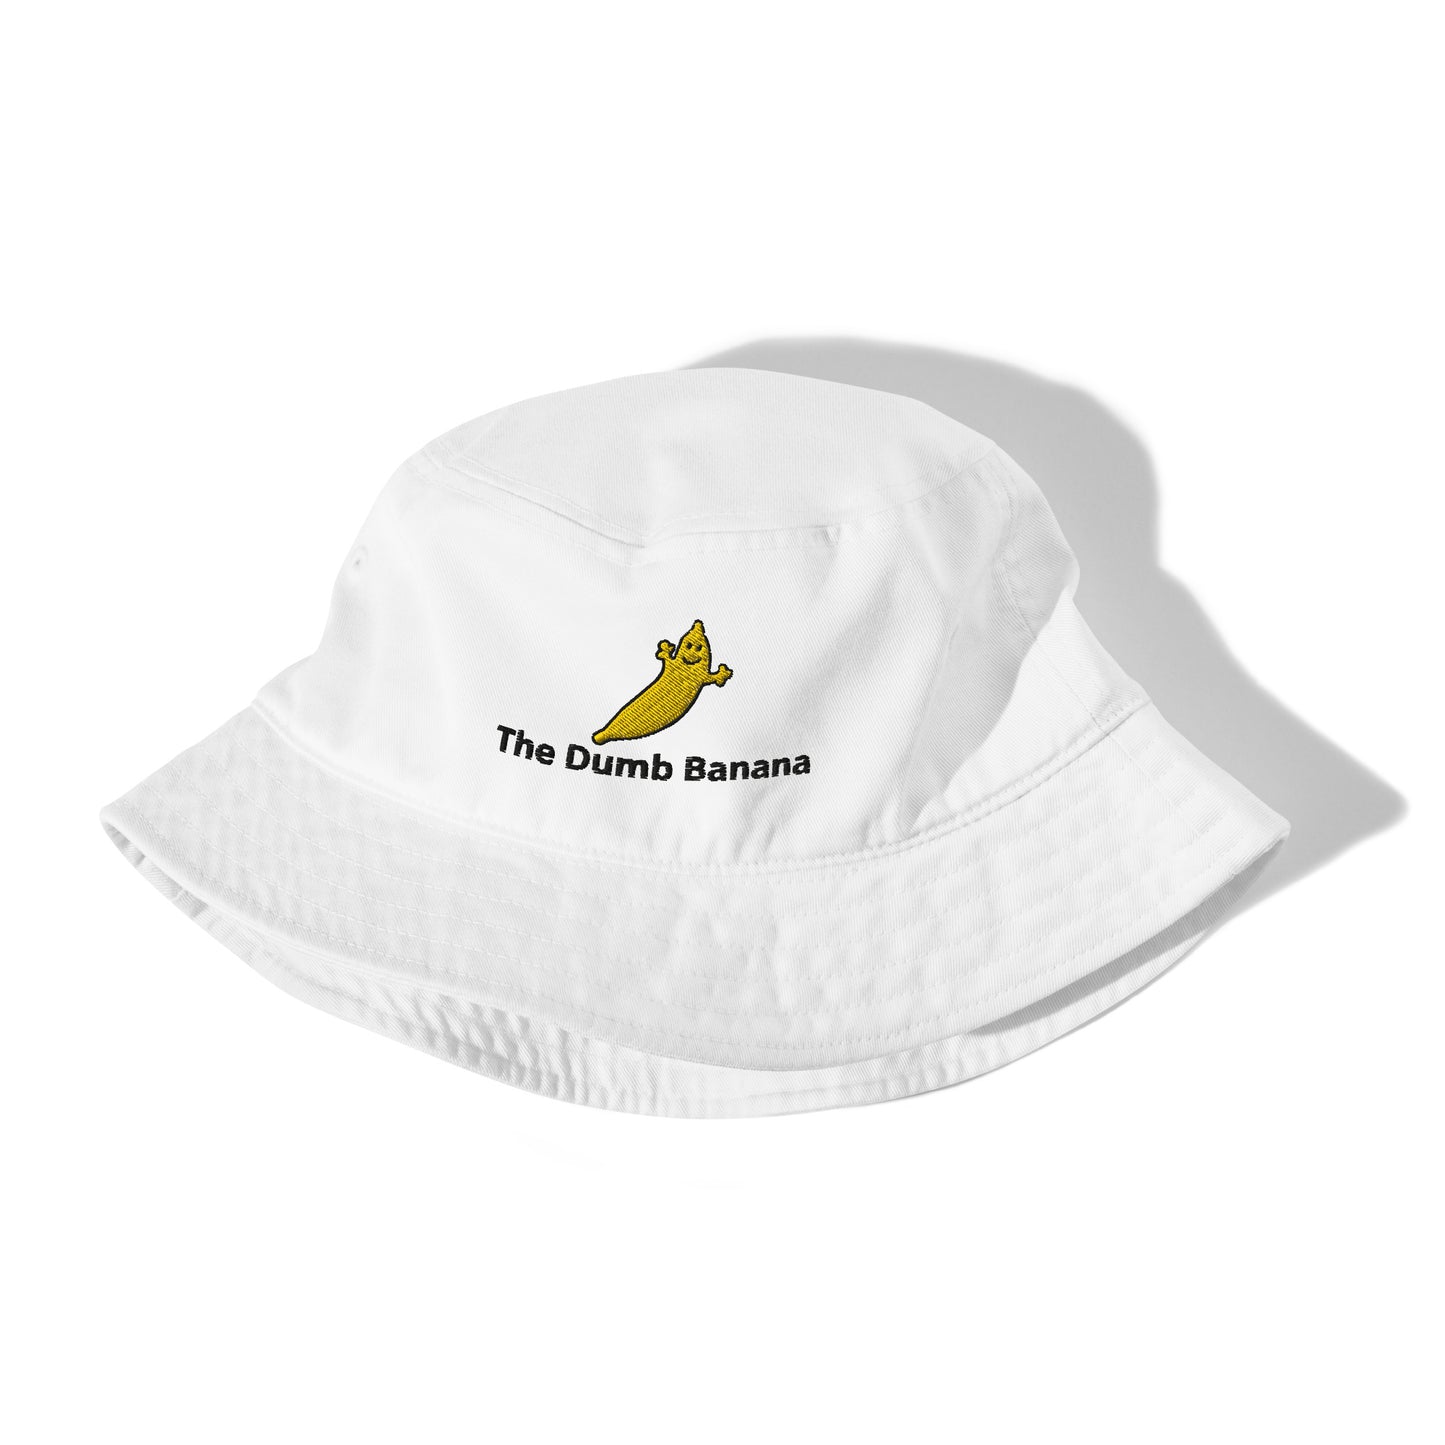 THE DUMB BANANA Organic Bucket Hat - You'll look and feel like a classic banana!!!